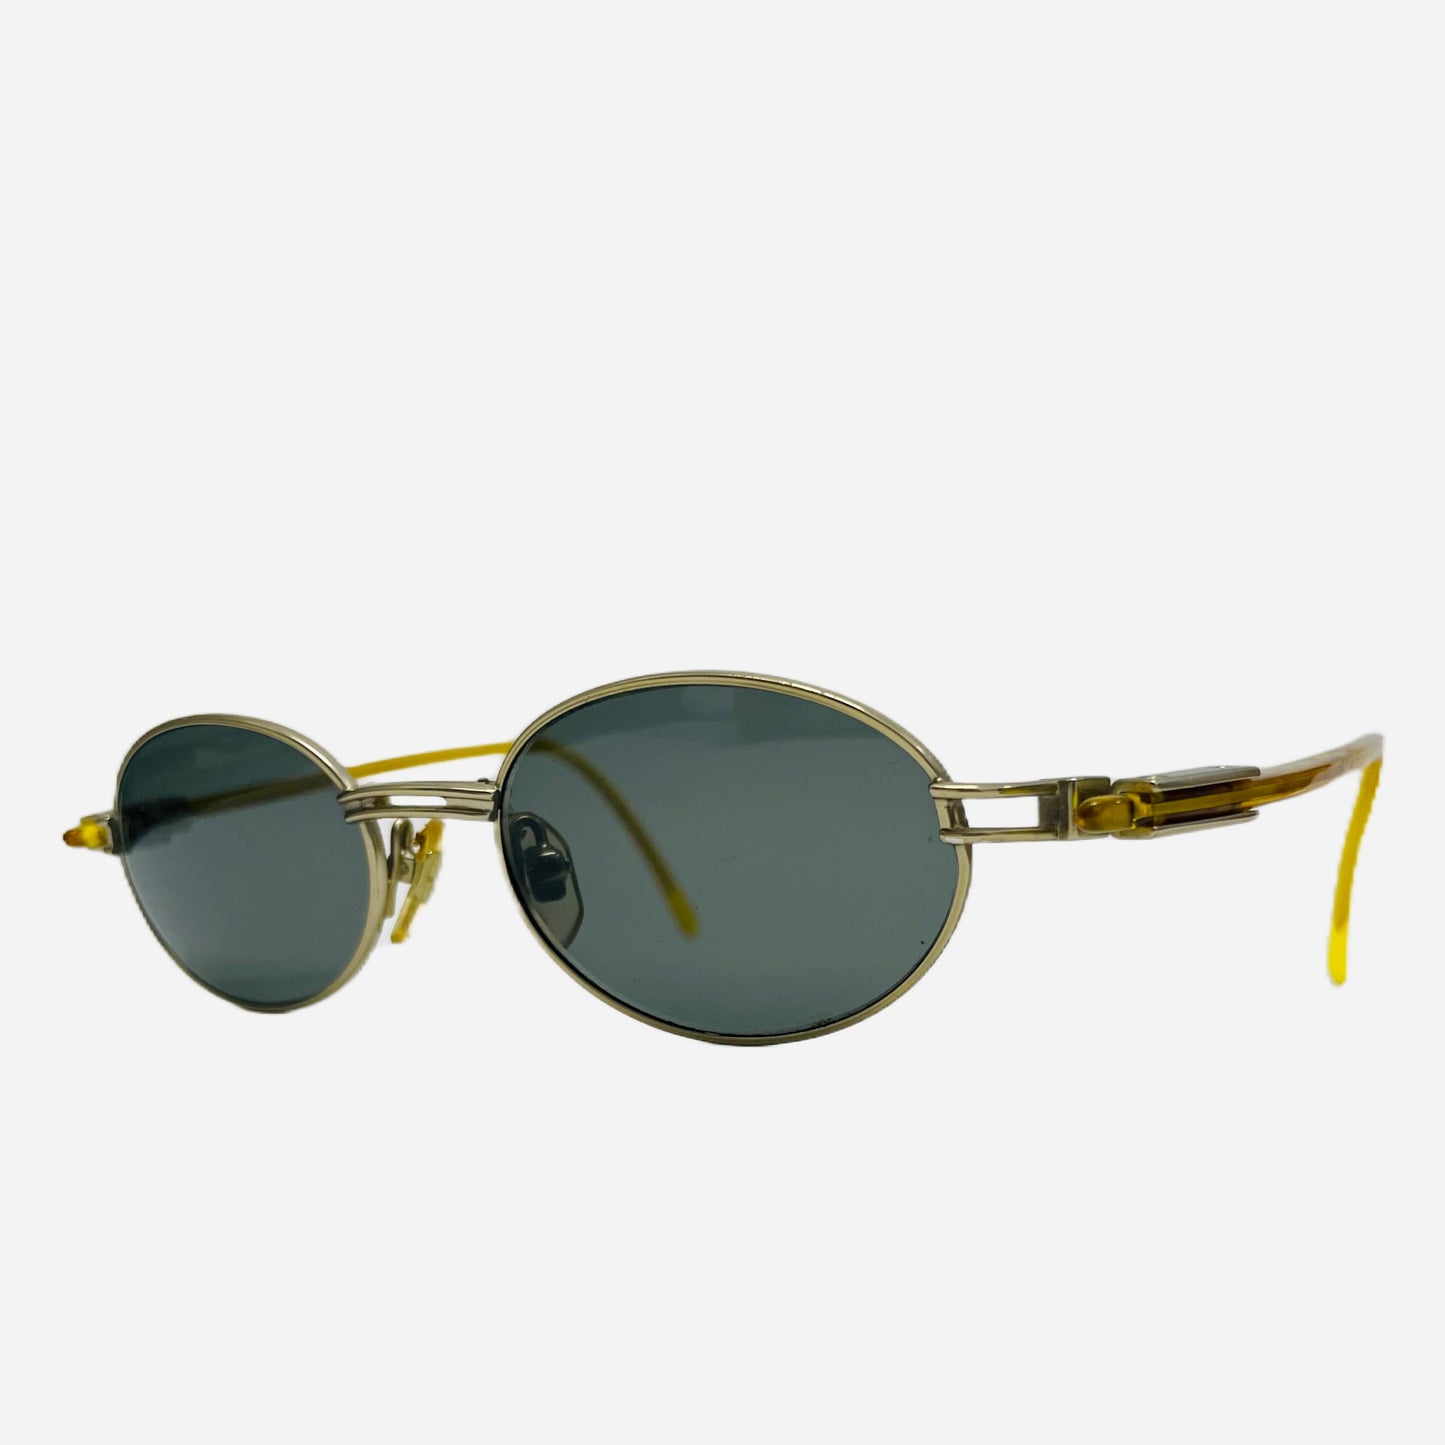 Vintage-Yohji-Yamamoto-Sonnenbrille-Sunglasses-52-7202-the-seekers-front